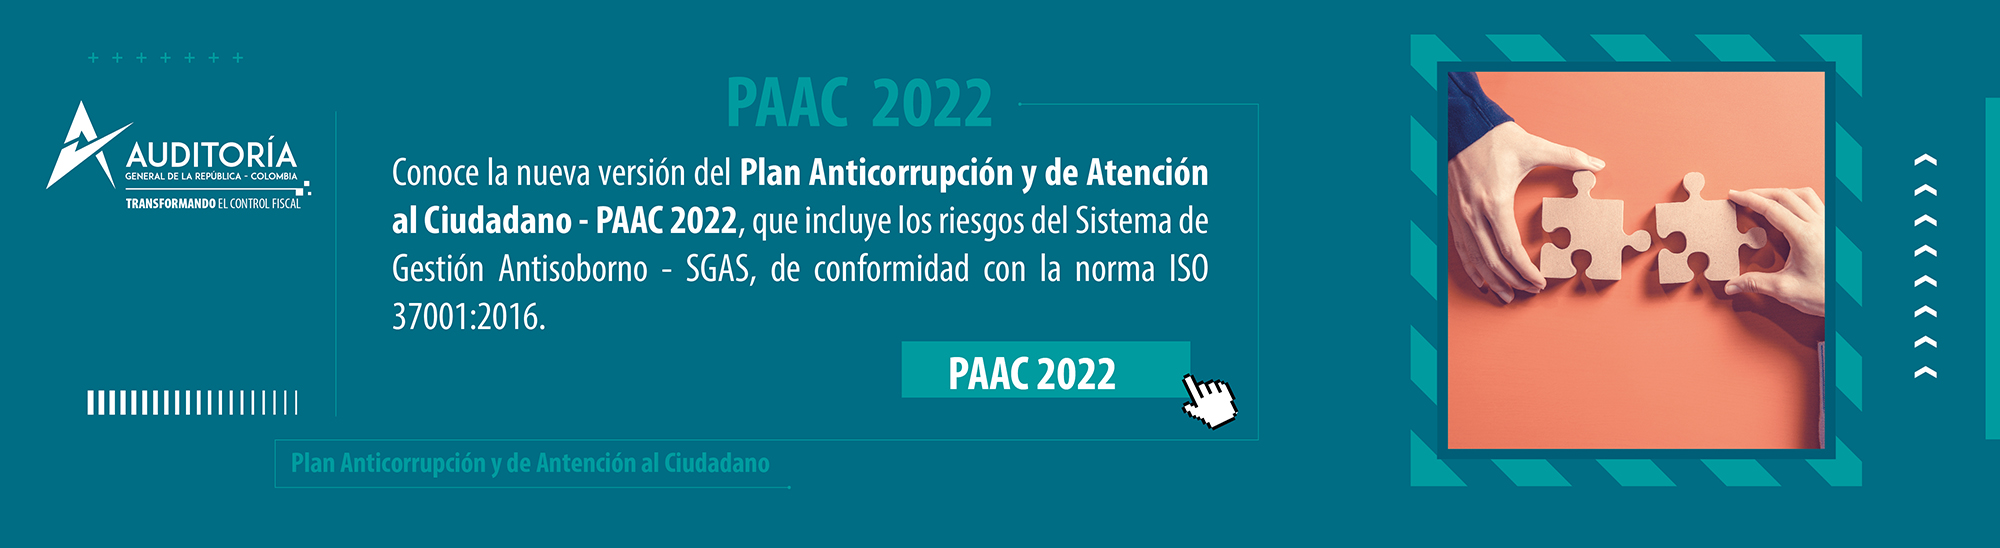 PAAC 2022 - V02